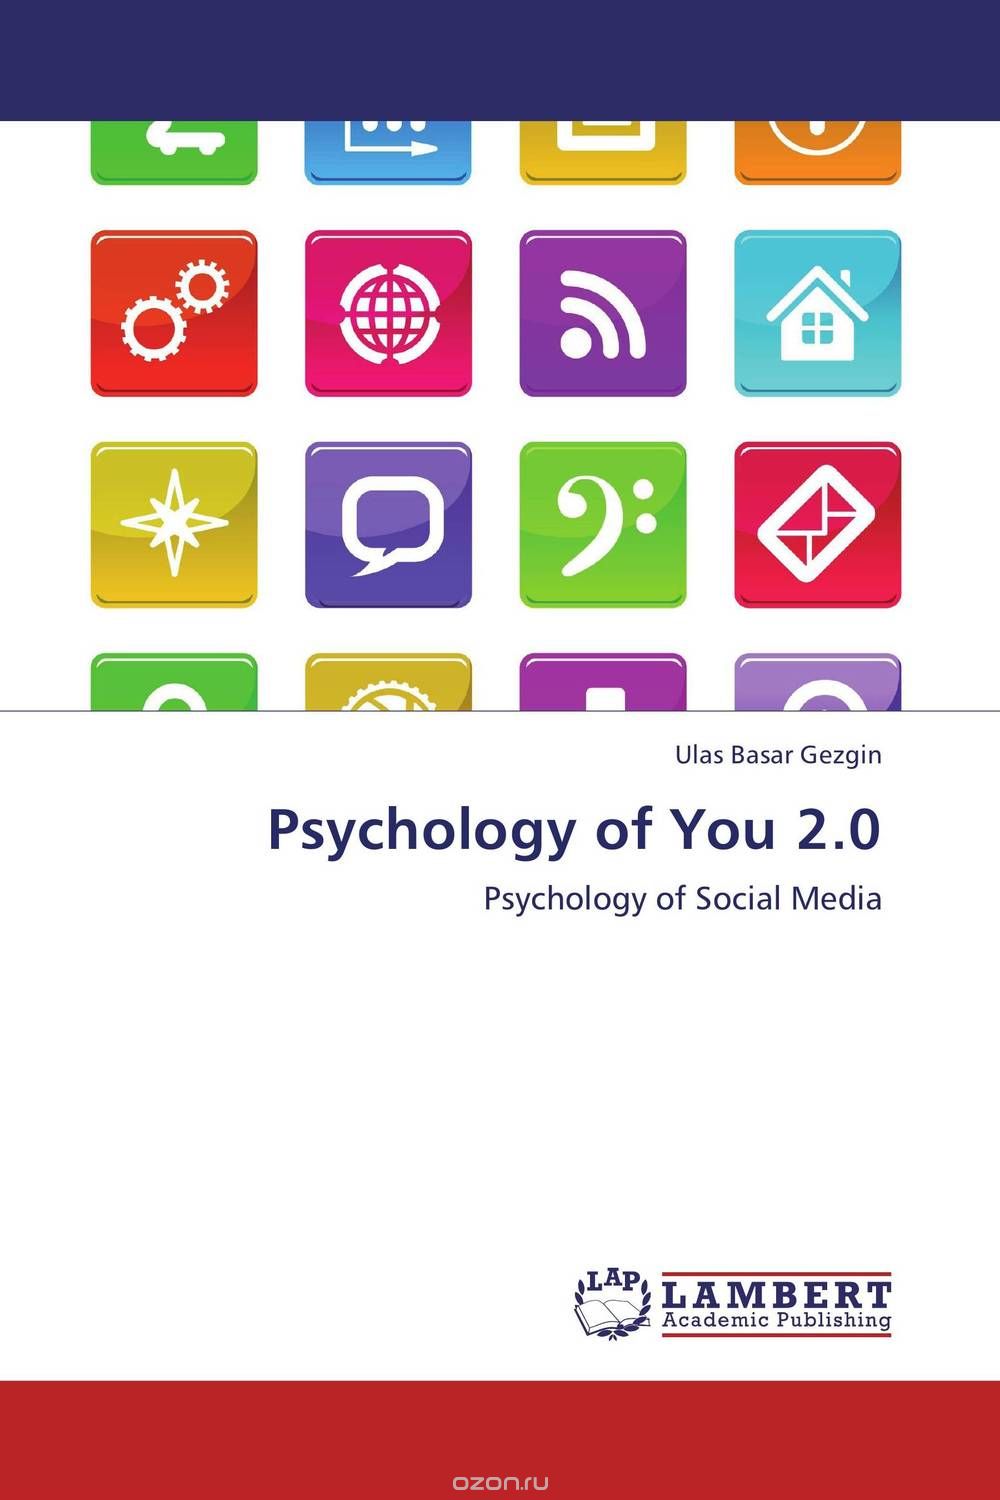 Psychology of You 2.0